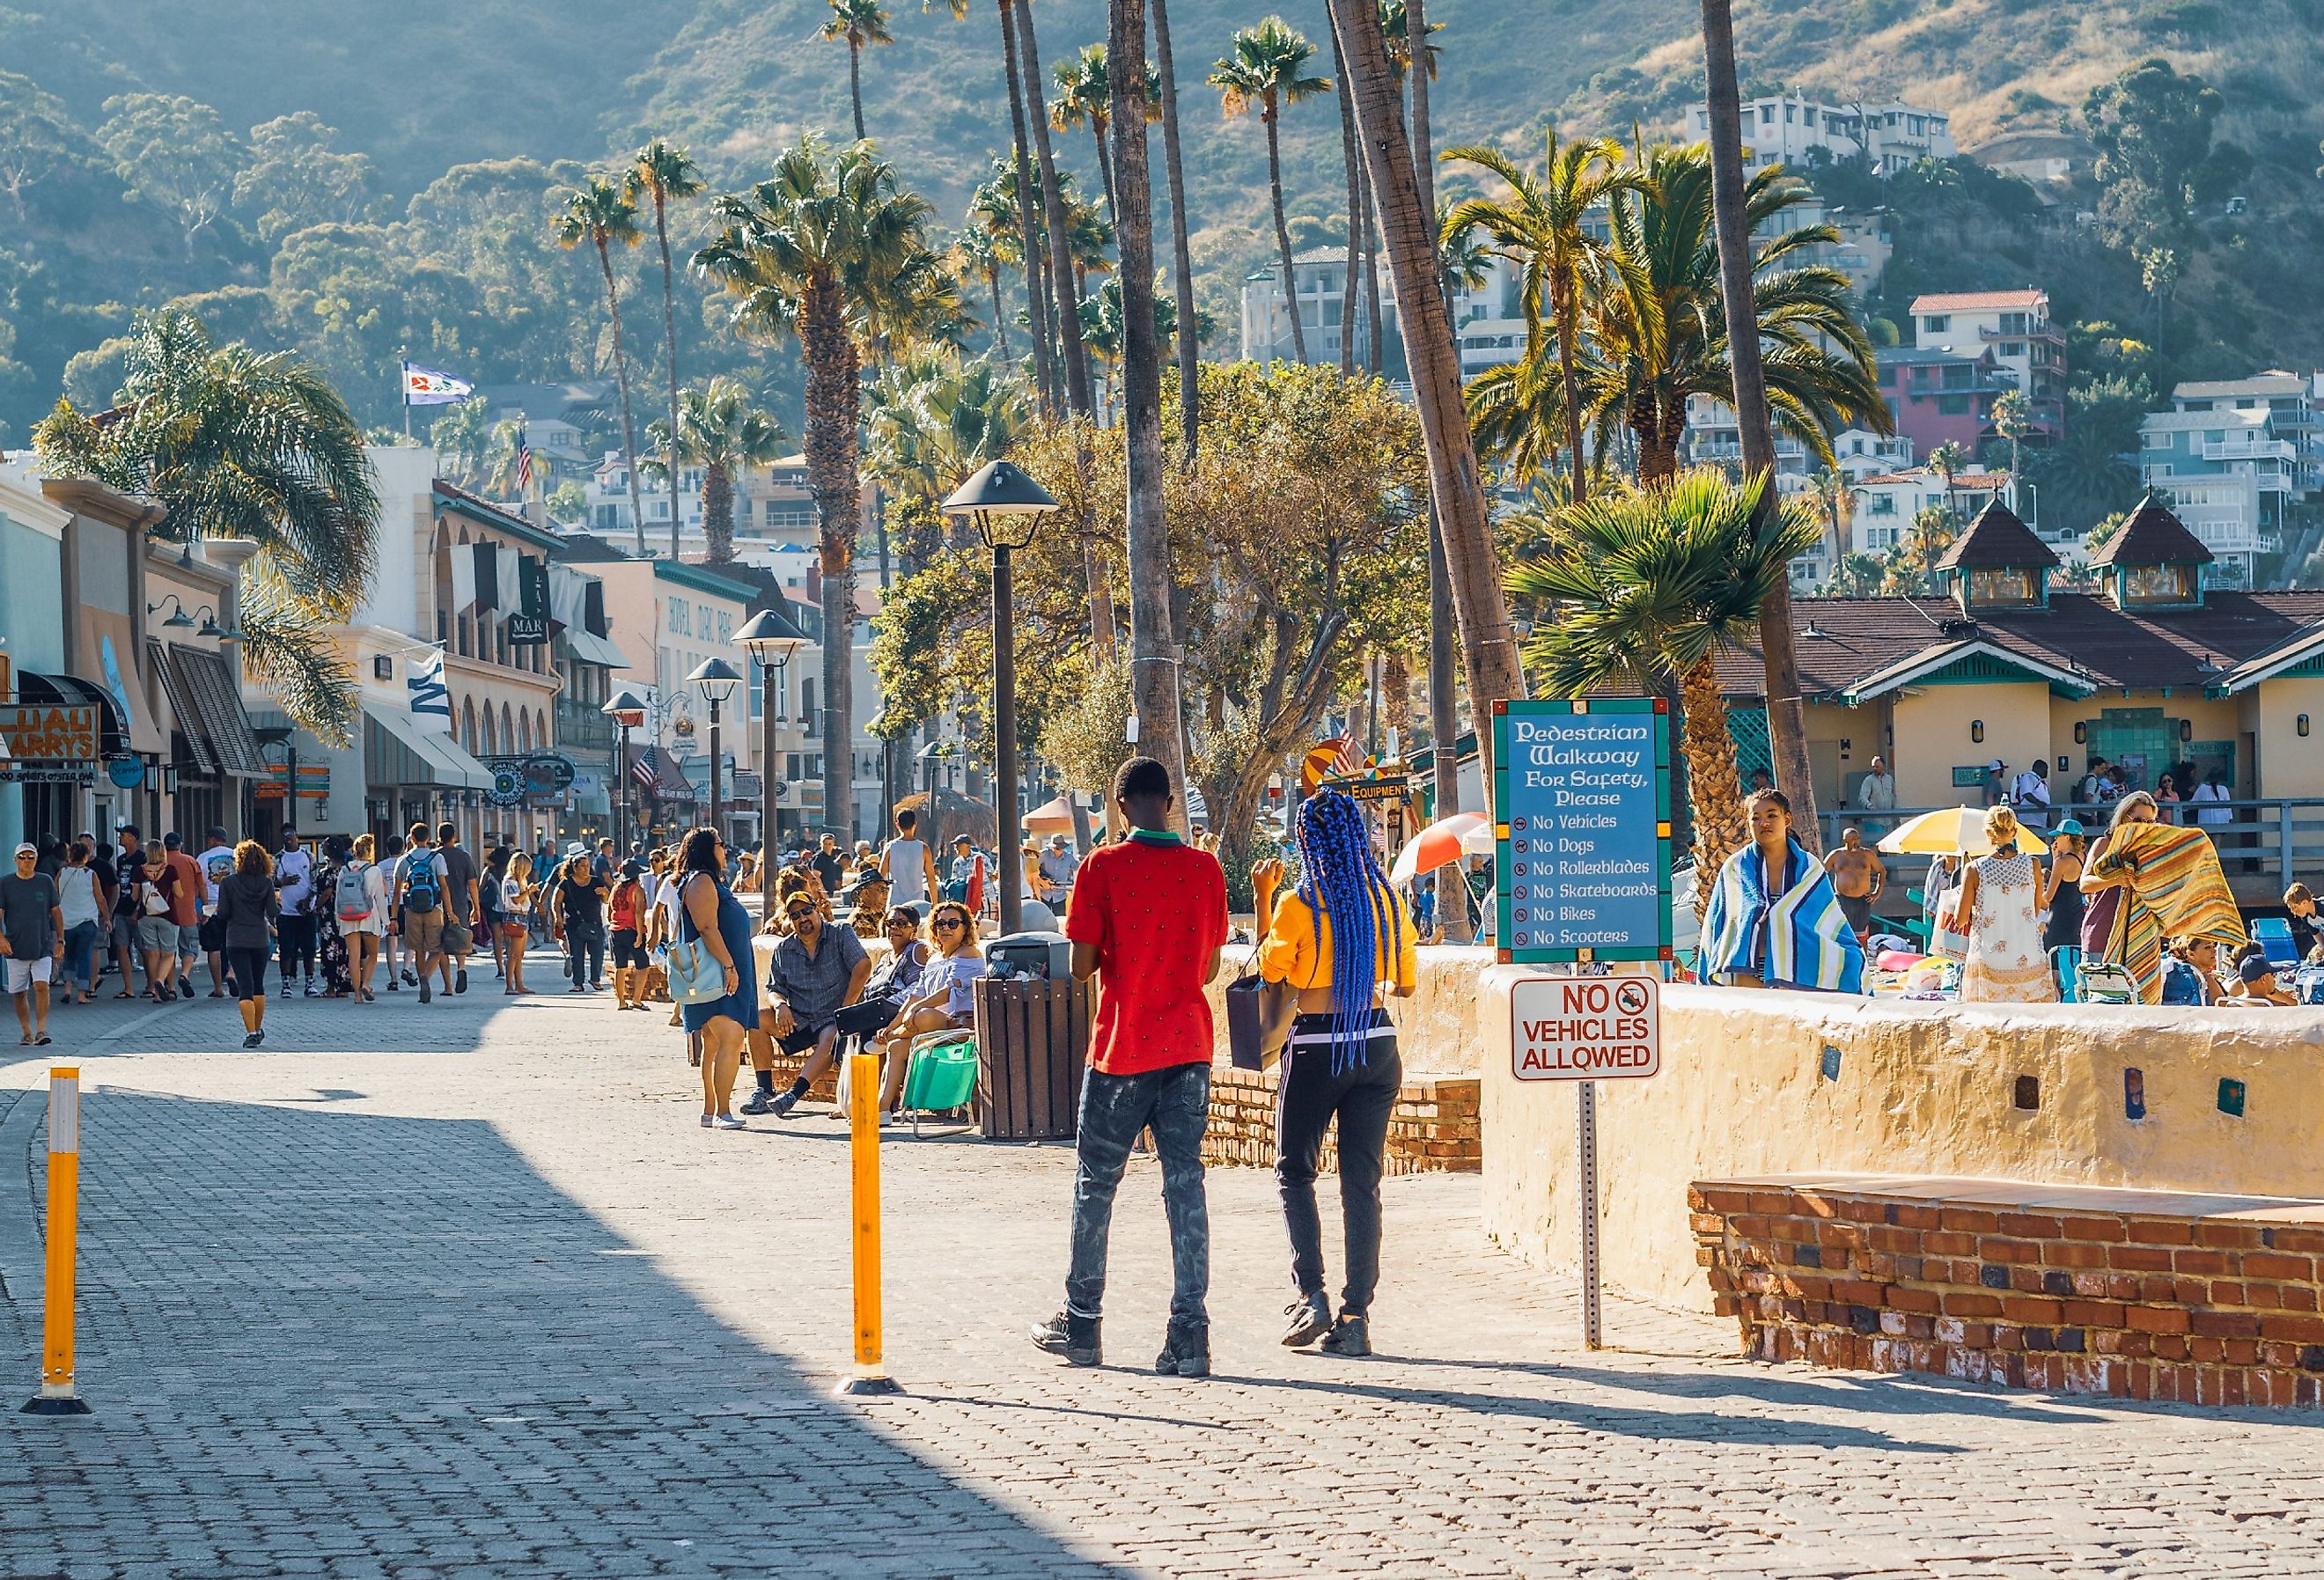 People walking in downtown Avalon, Catalina Island, California. Image credit HannaTor via Shutterstock